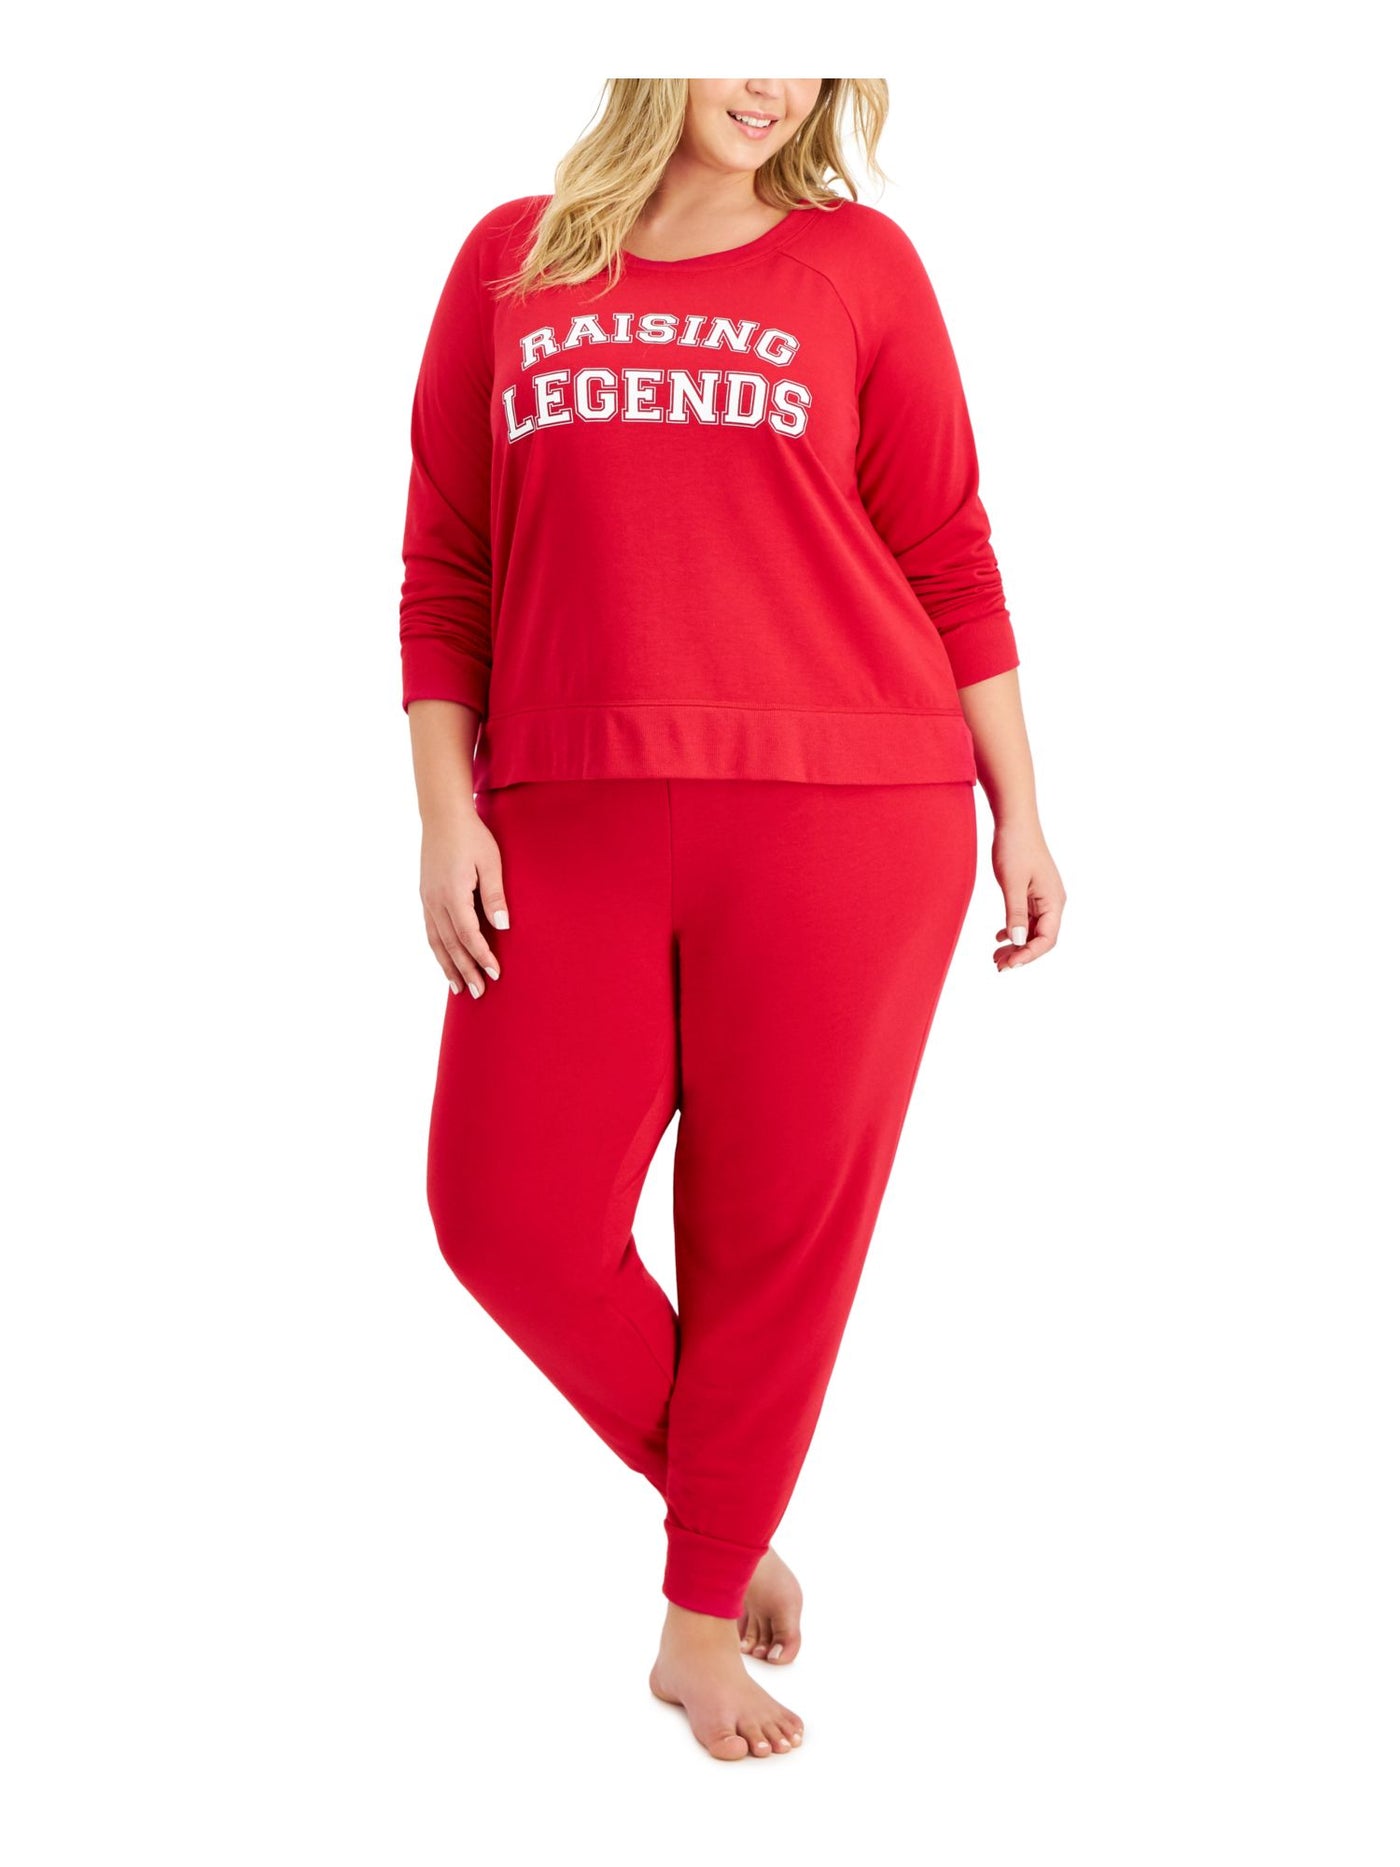 FAMILY PJs Womens Raising Legends Red Printed Elastic Band Long Sleeve T-Shirt Top Cuffed Pants Pajamas Plus 1X